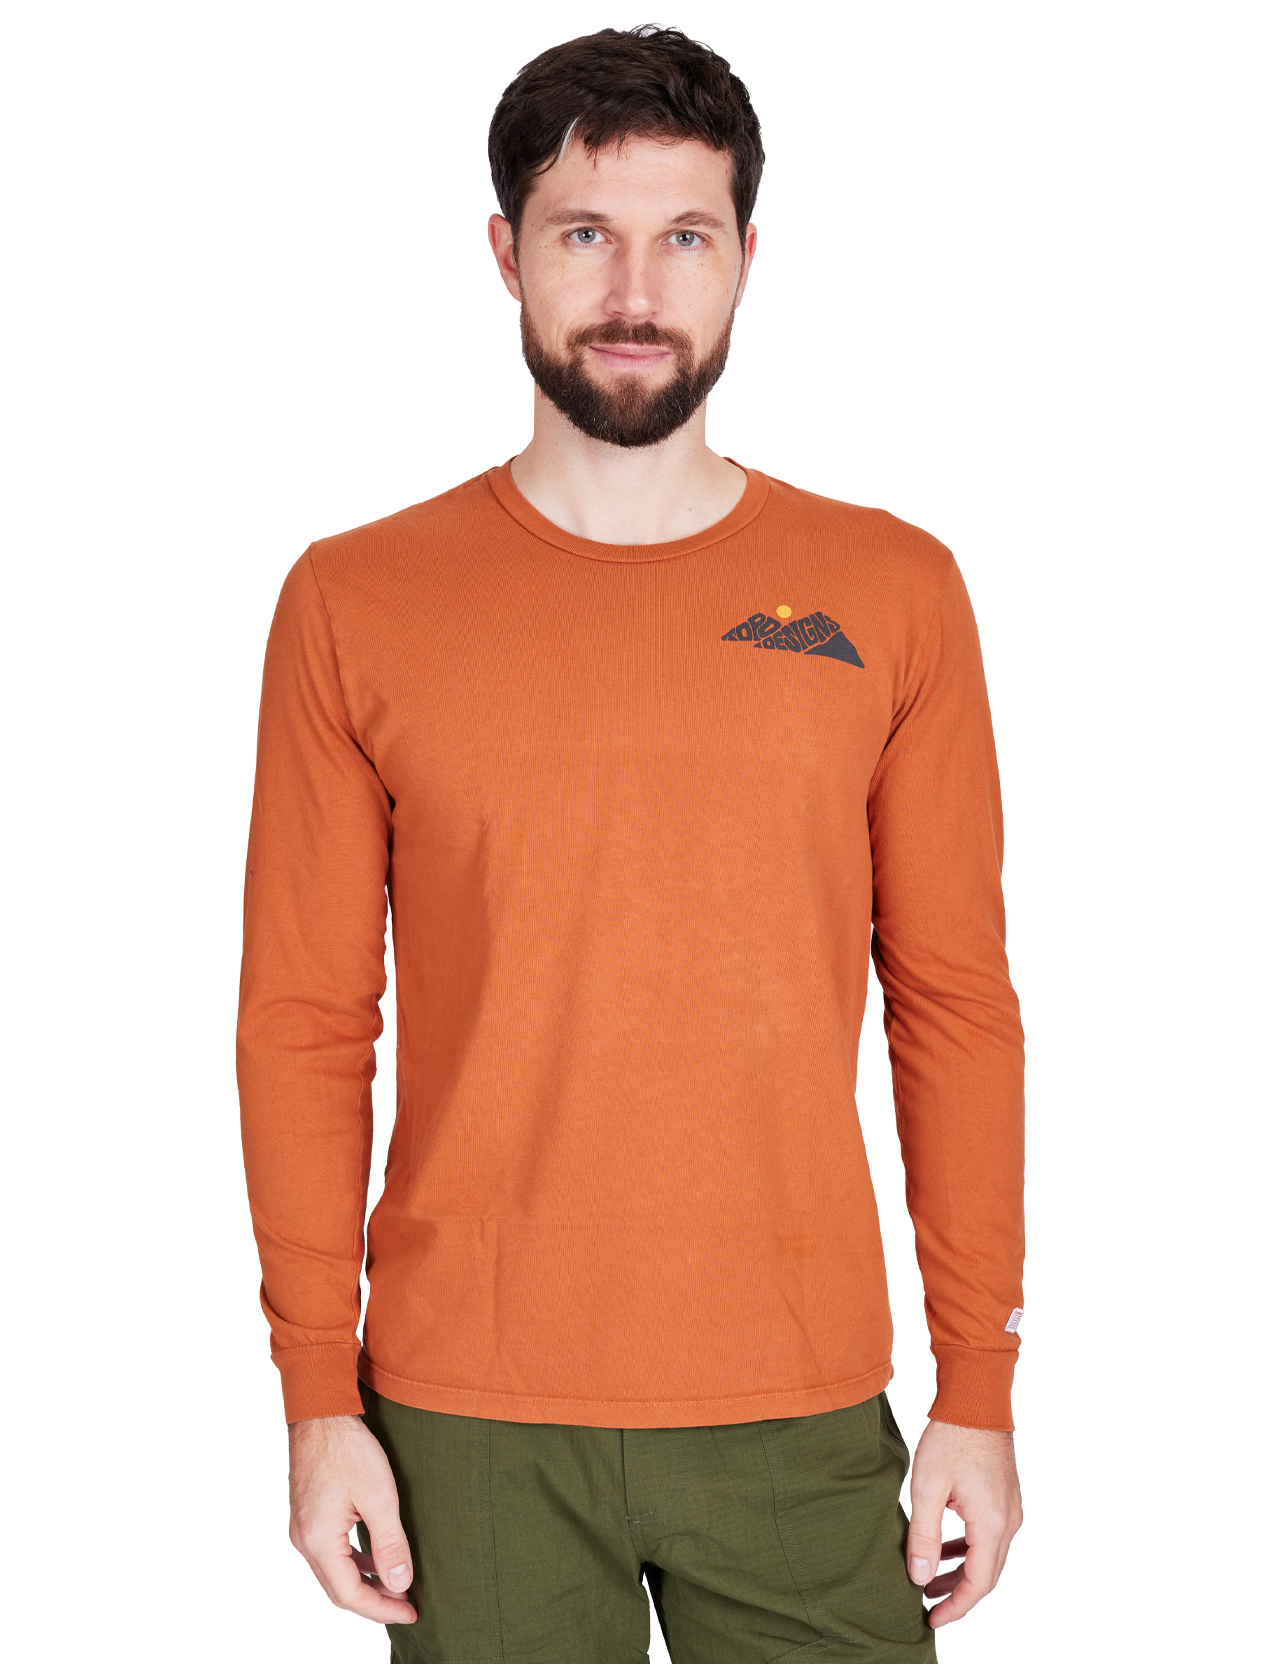 TOPO Designs - Rugged Peaks Long Sleeve T-Shirt - Clay